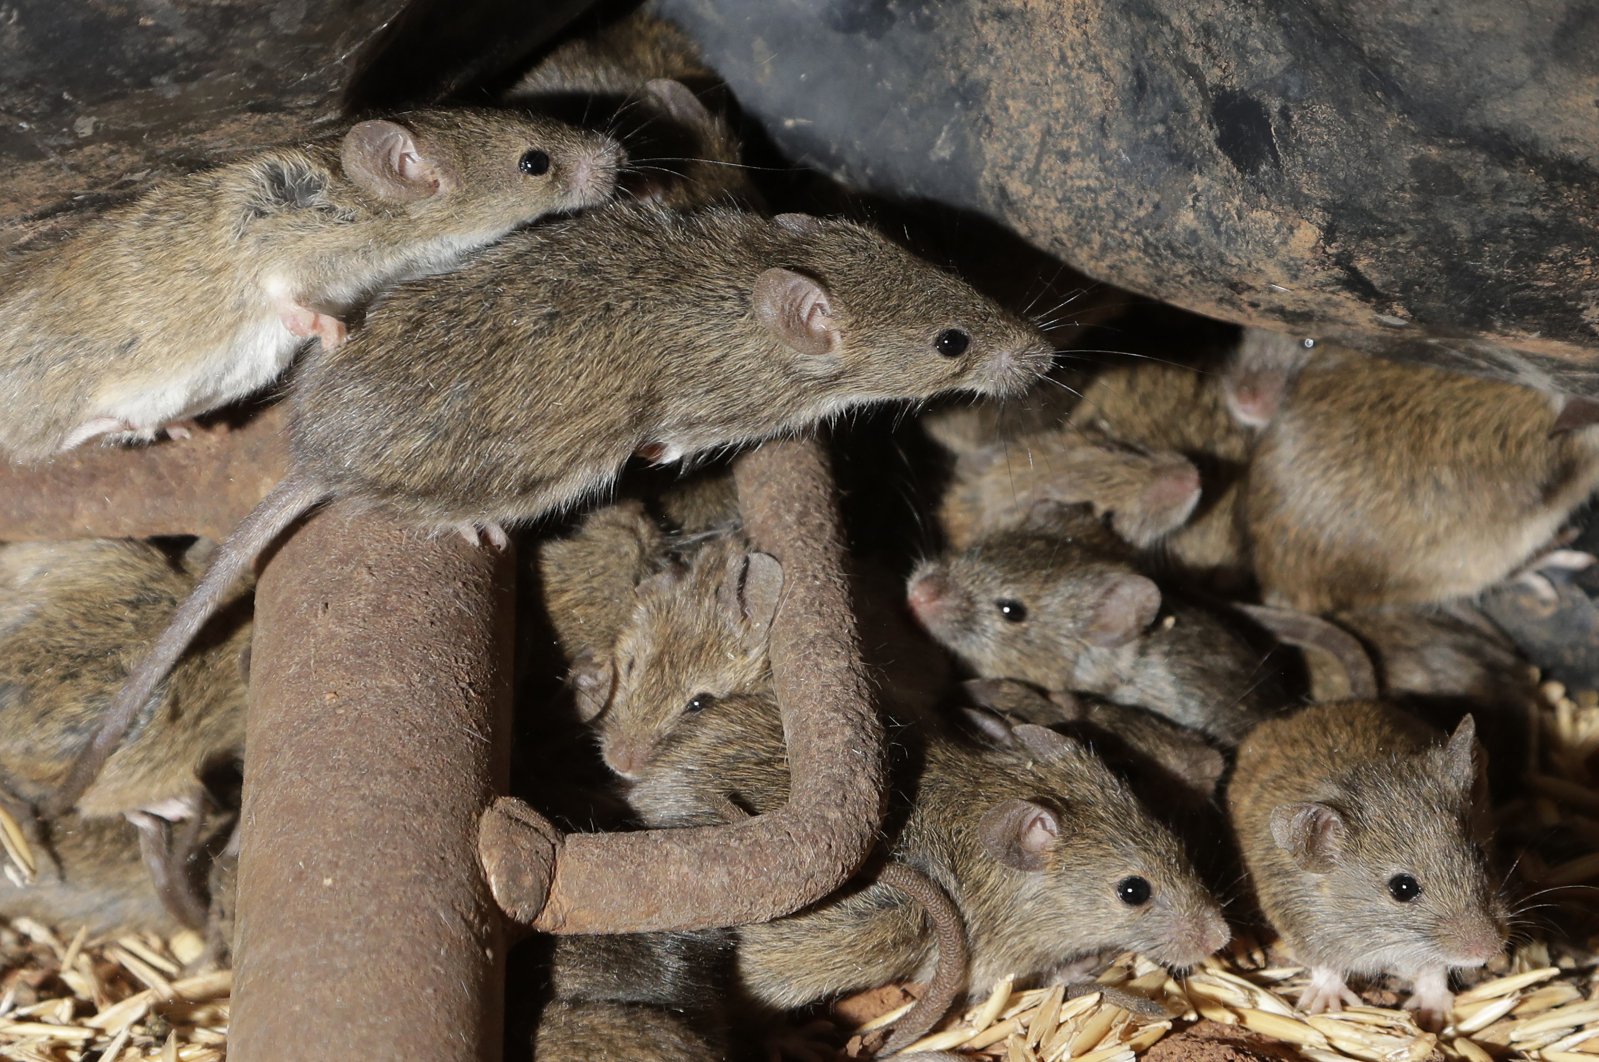 Mice scurry around stored grain on a farm near Tottenham, Australia, May 19, 2021. (AP Photo)